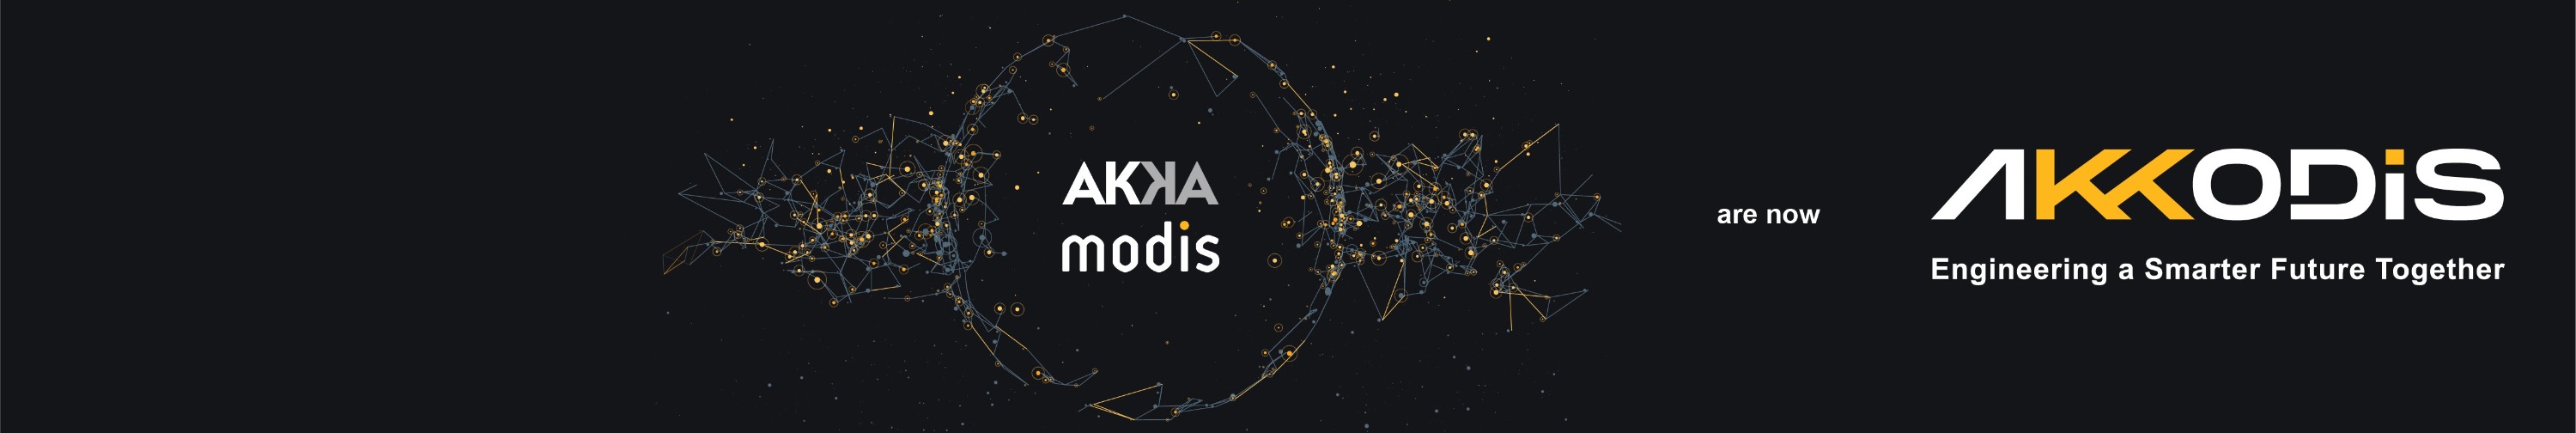 Akka-Technologies background